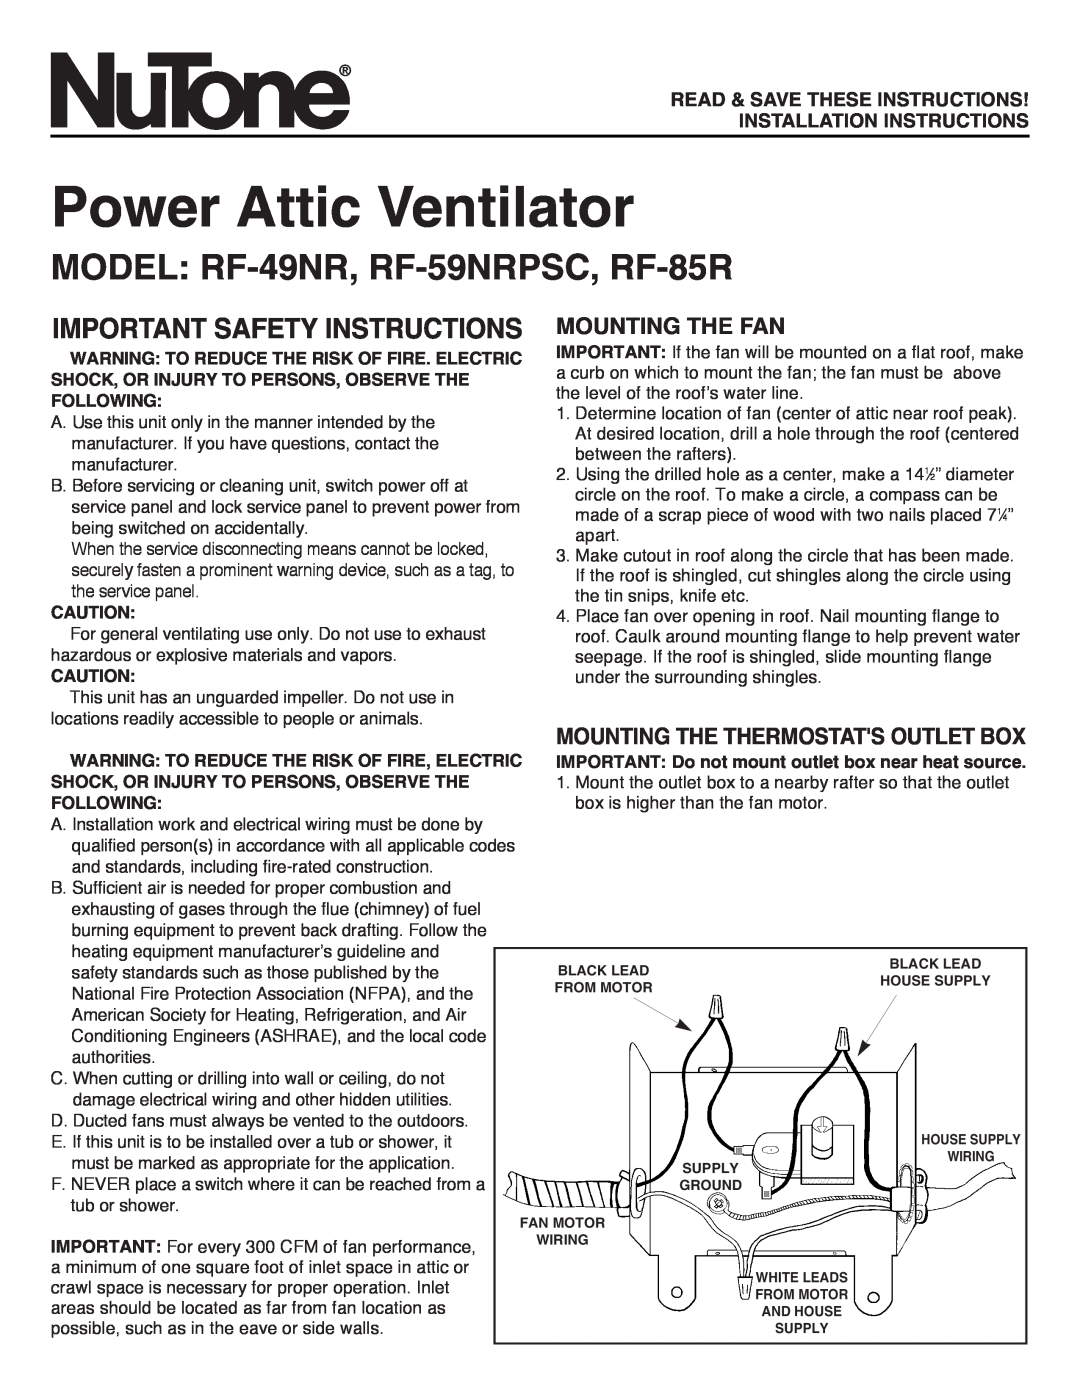 NuTone important safety instructions Power Attic Ventilator, MODEL RF-49NR, RF-59NRPSC, RF-85R, Mounting The Fan 